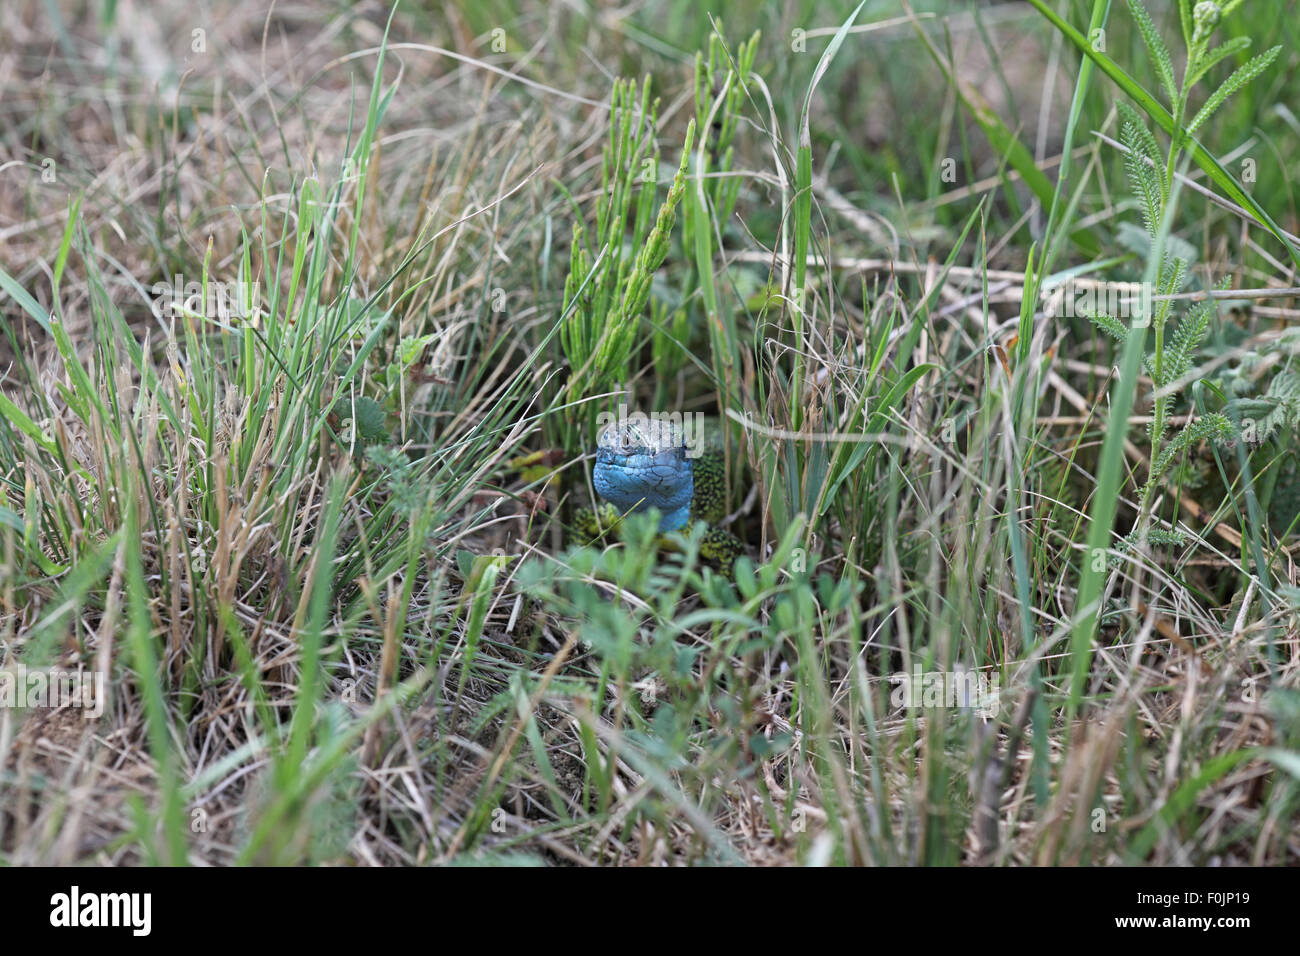 Lacerta viridis ramarro maschio maschio muovendosi attraverso erba lunga vista frontale Foto Stock